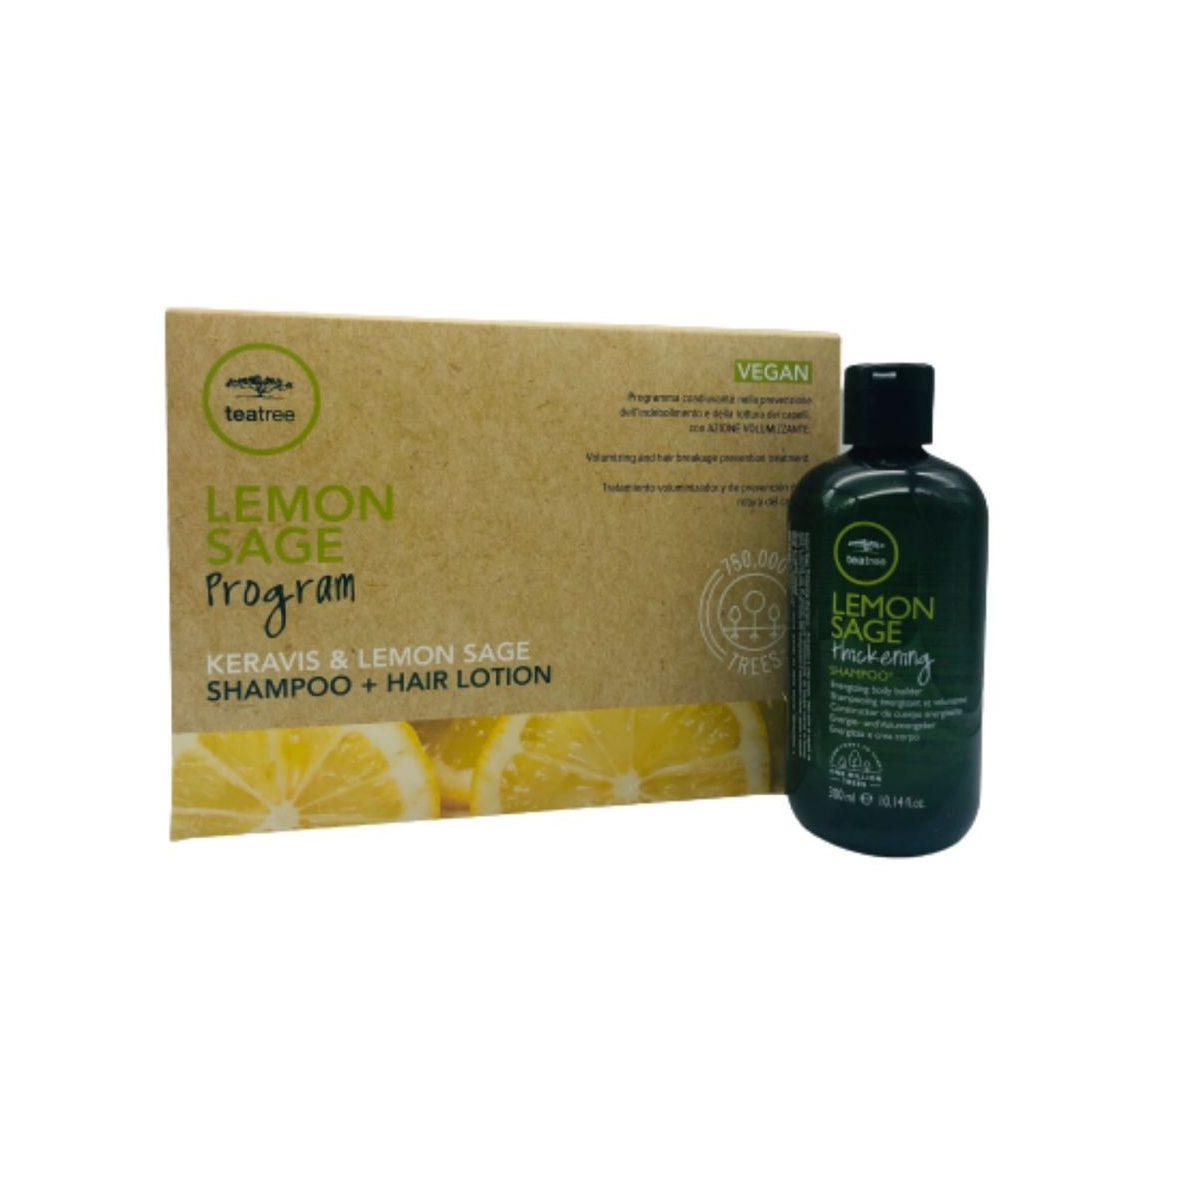 PAUL MITCHELL - LEMON SAGE PROGRAM - Keravis e Lemon Sage (Shampoo 300ml + 12 fiale da 6ml) Programma volumizzante